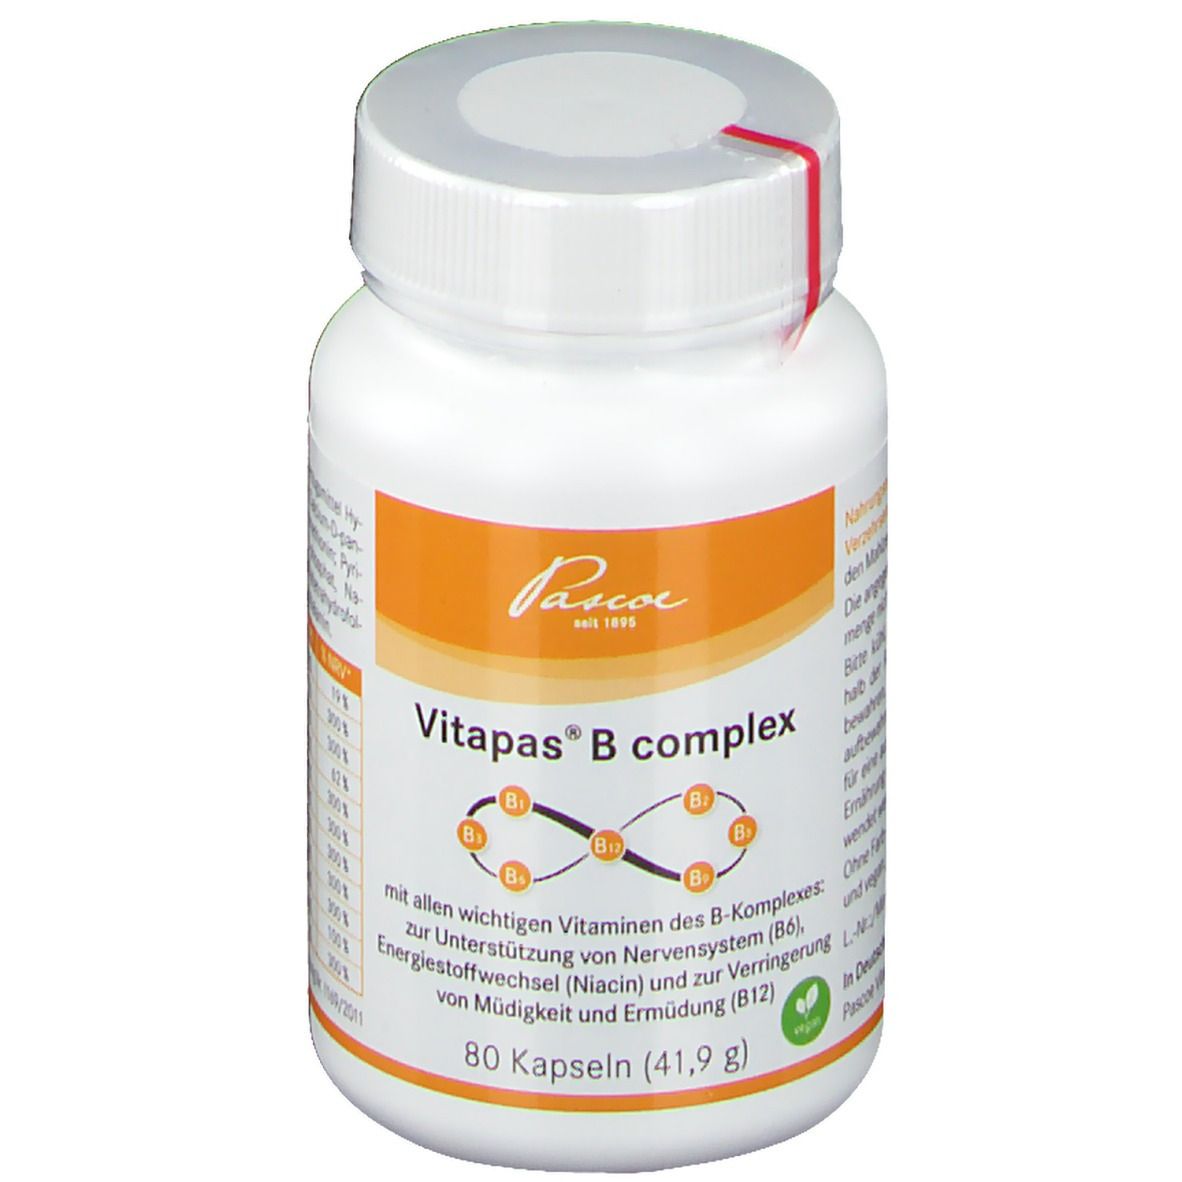 Vitapas® B complex